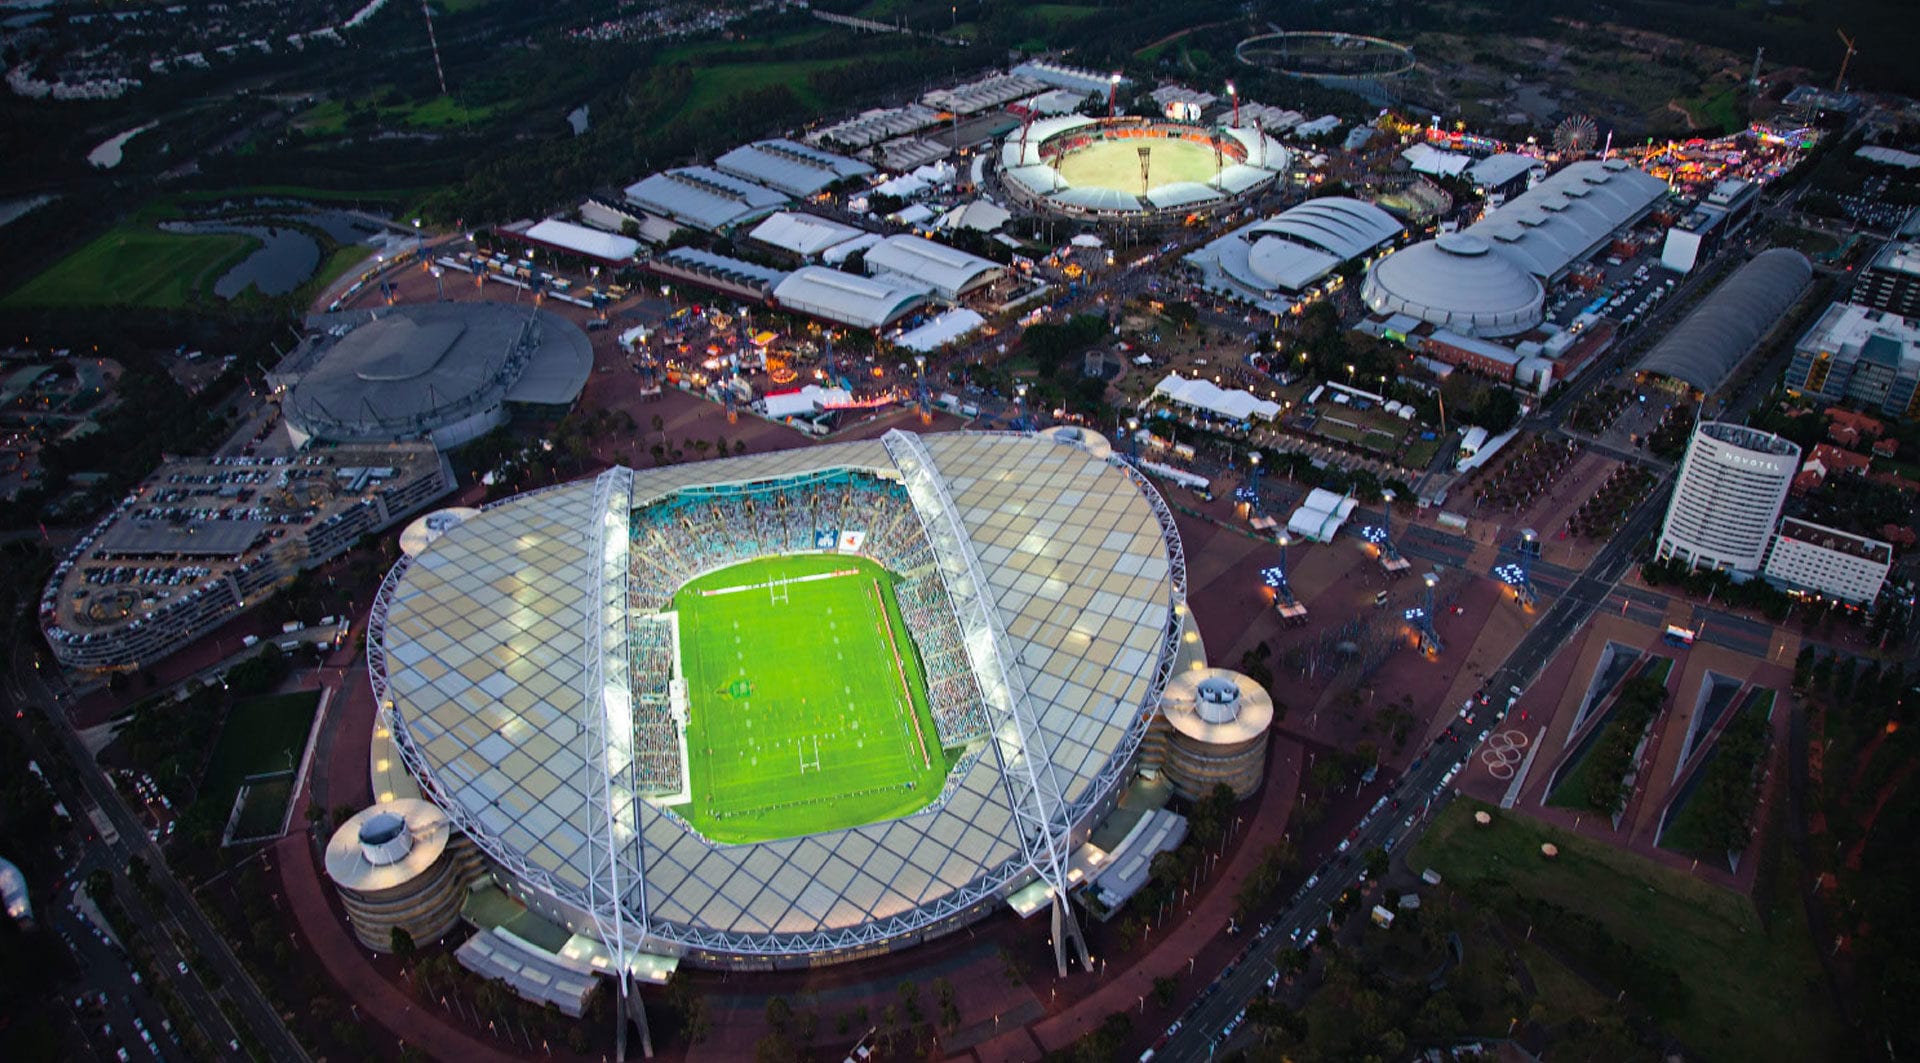 Stadium Australia, Sydney, NSW, Australia. 20th Aug, 2023. FIFA